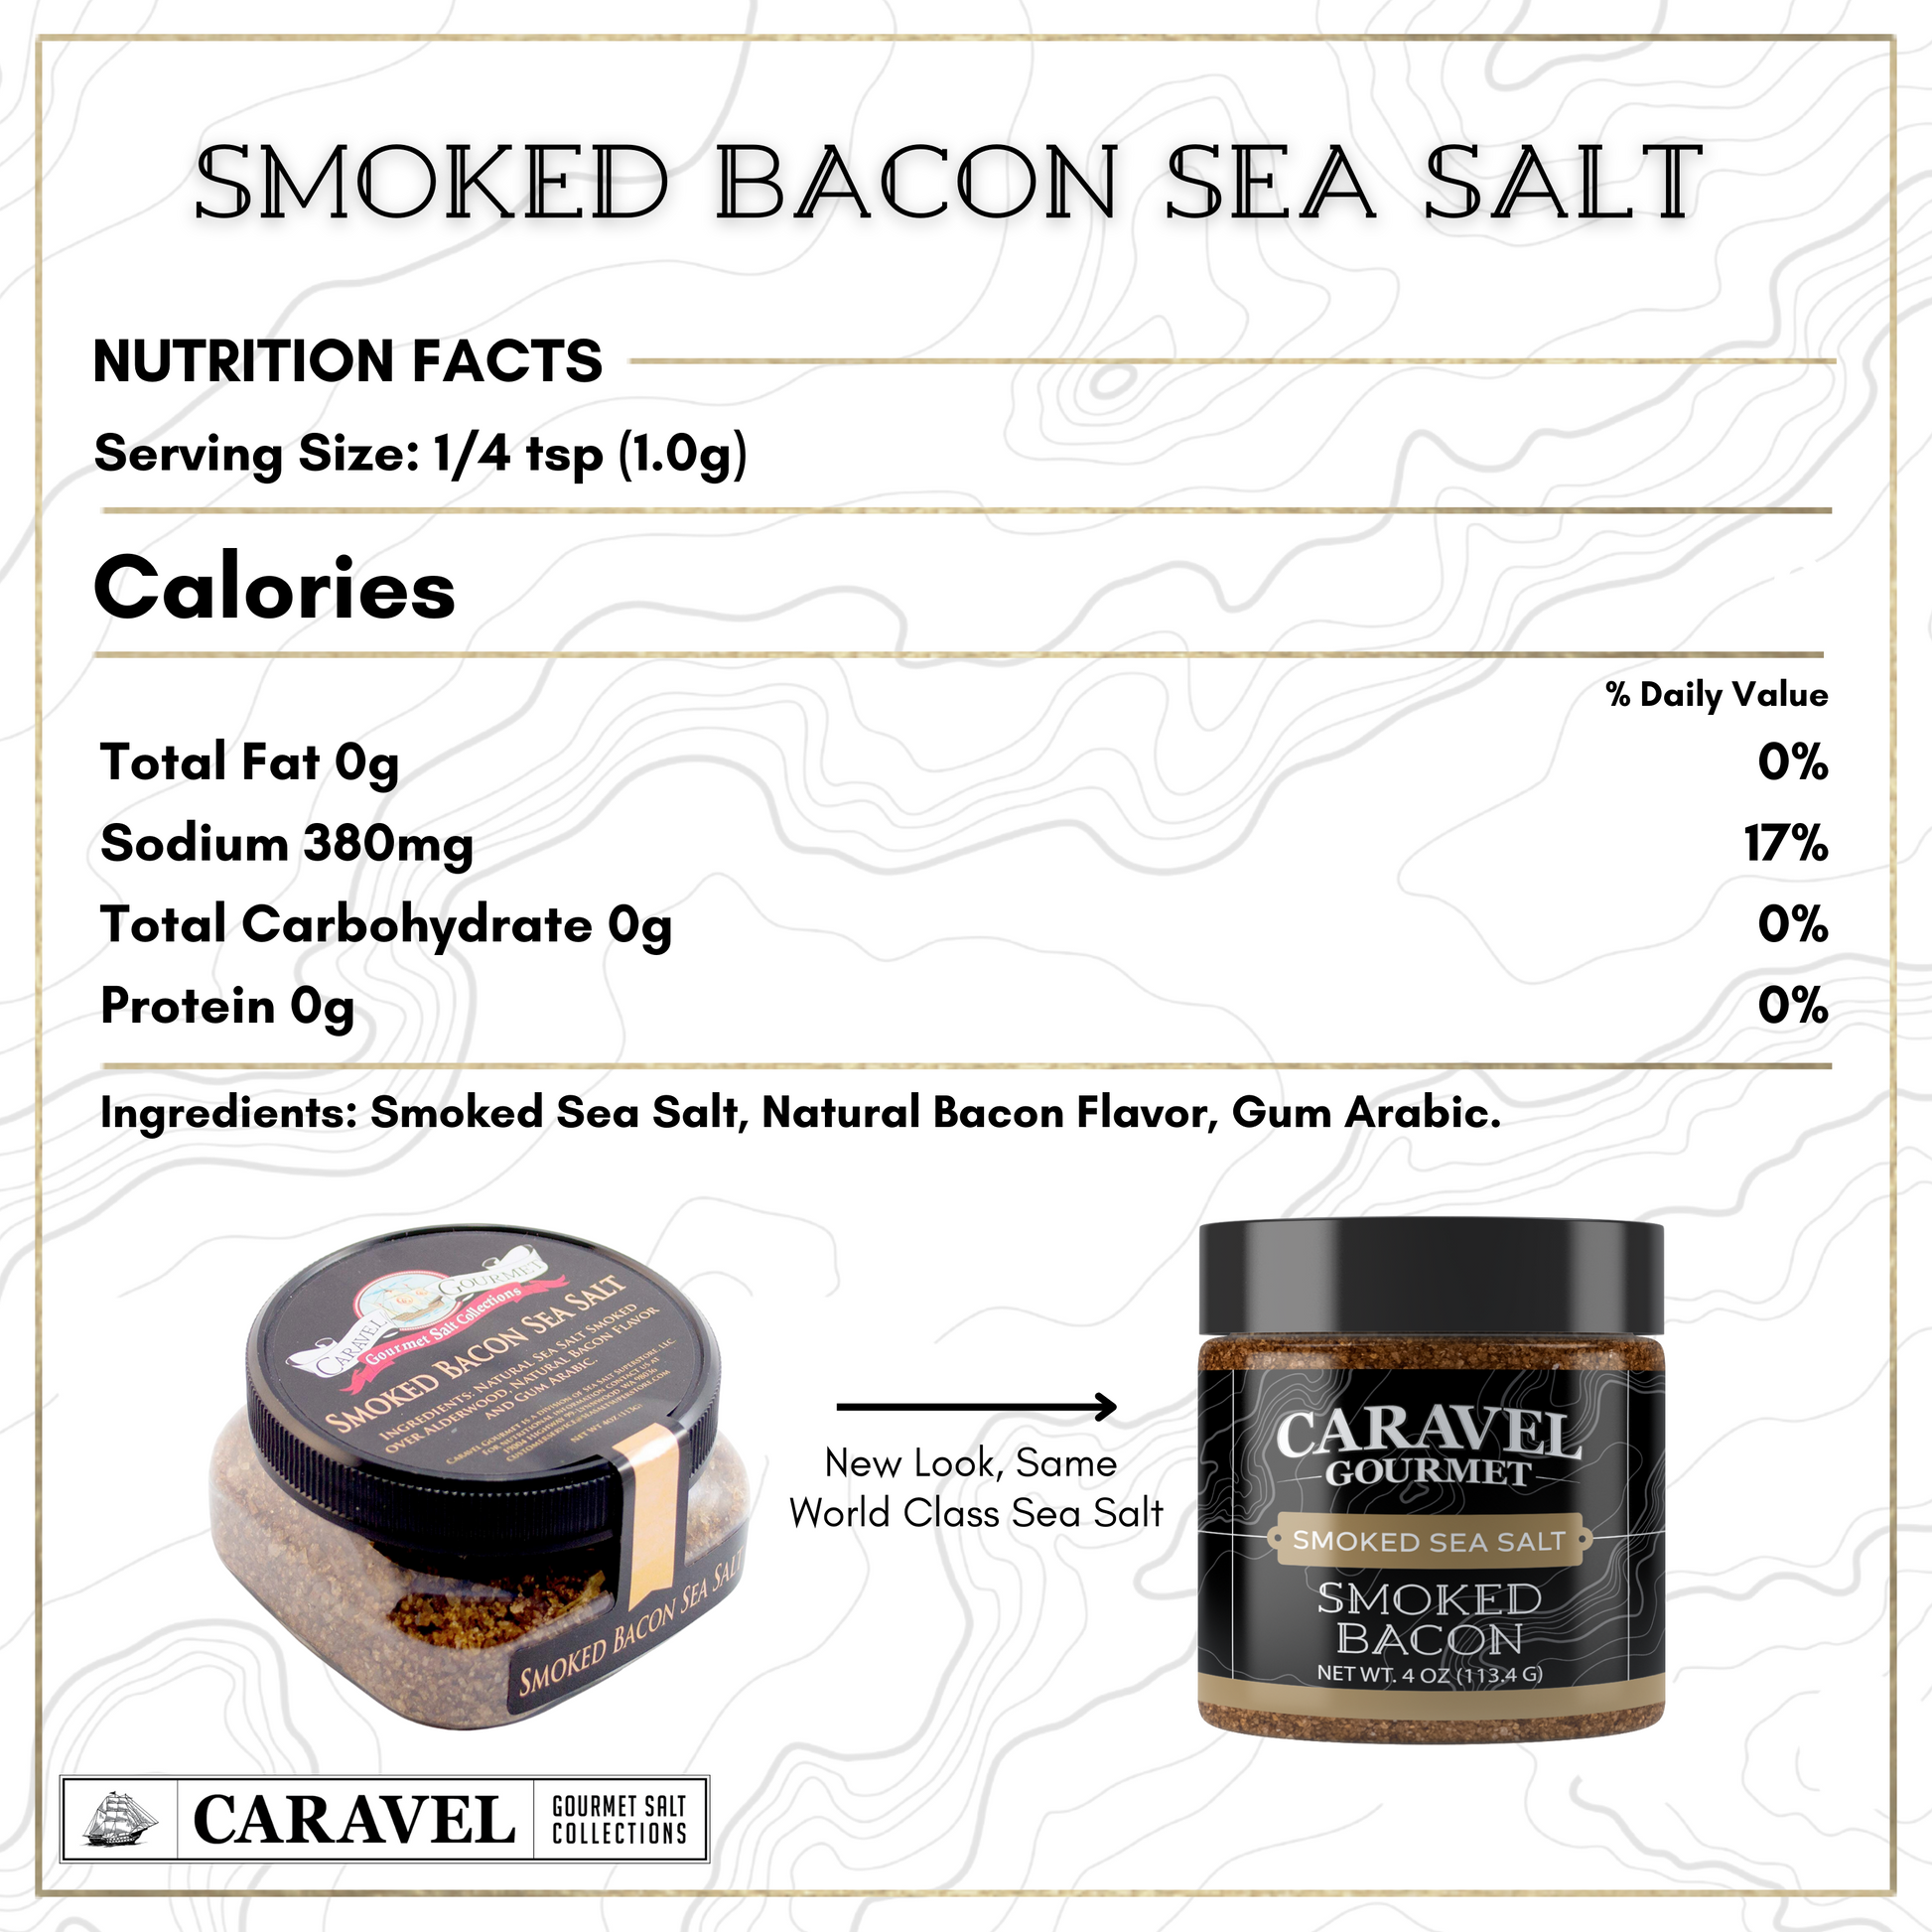 Smokey Bacon Infused Sea Salt